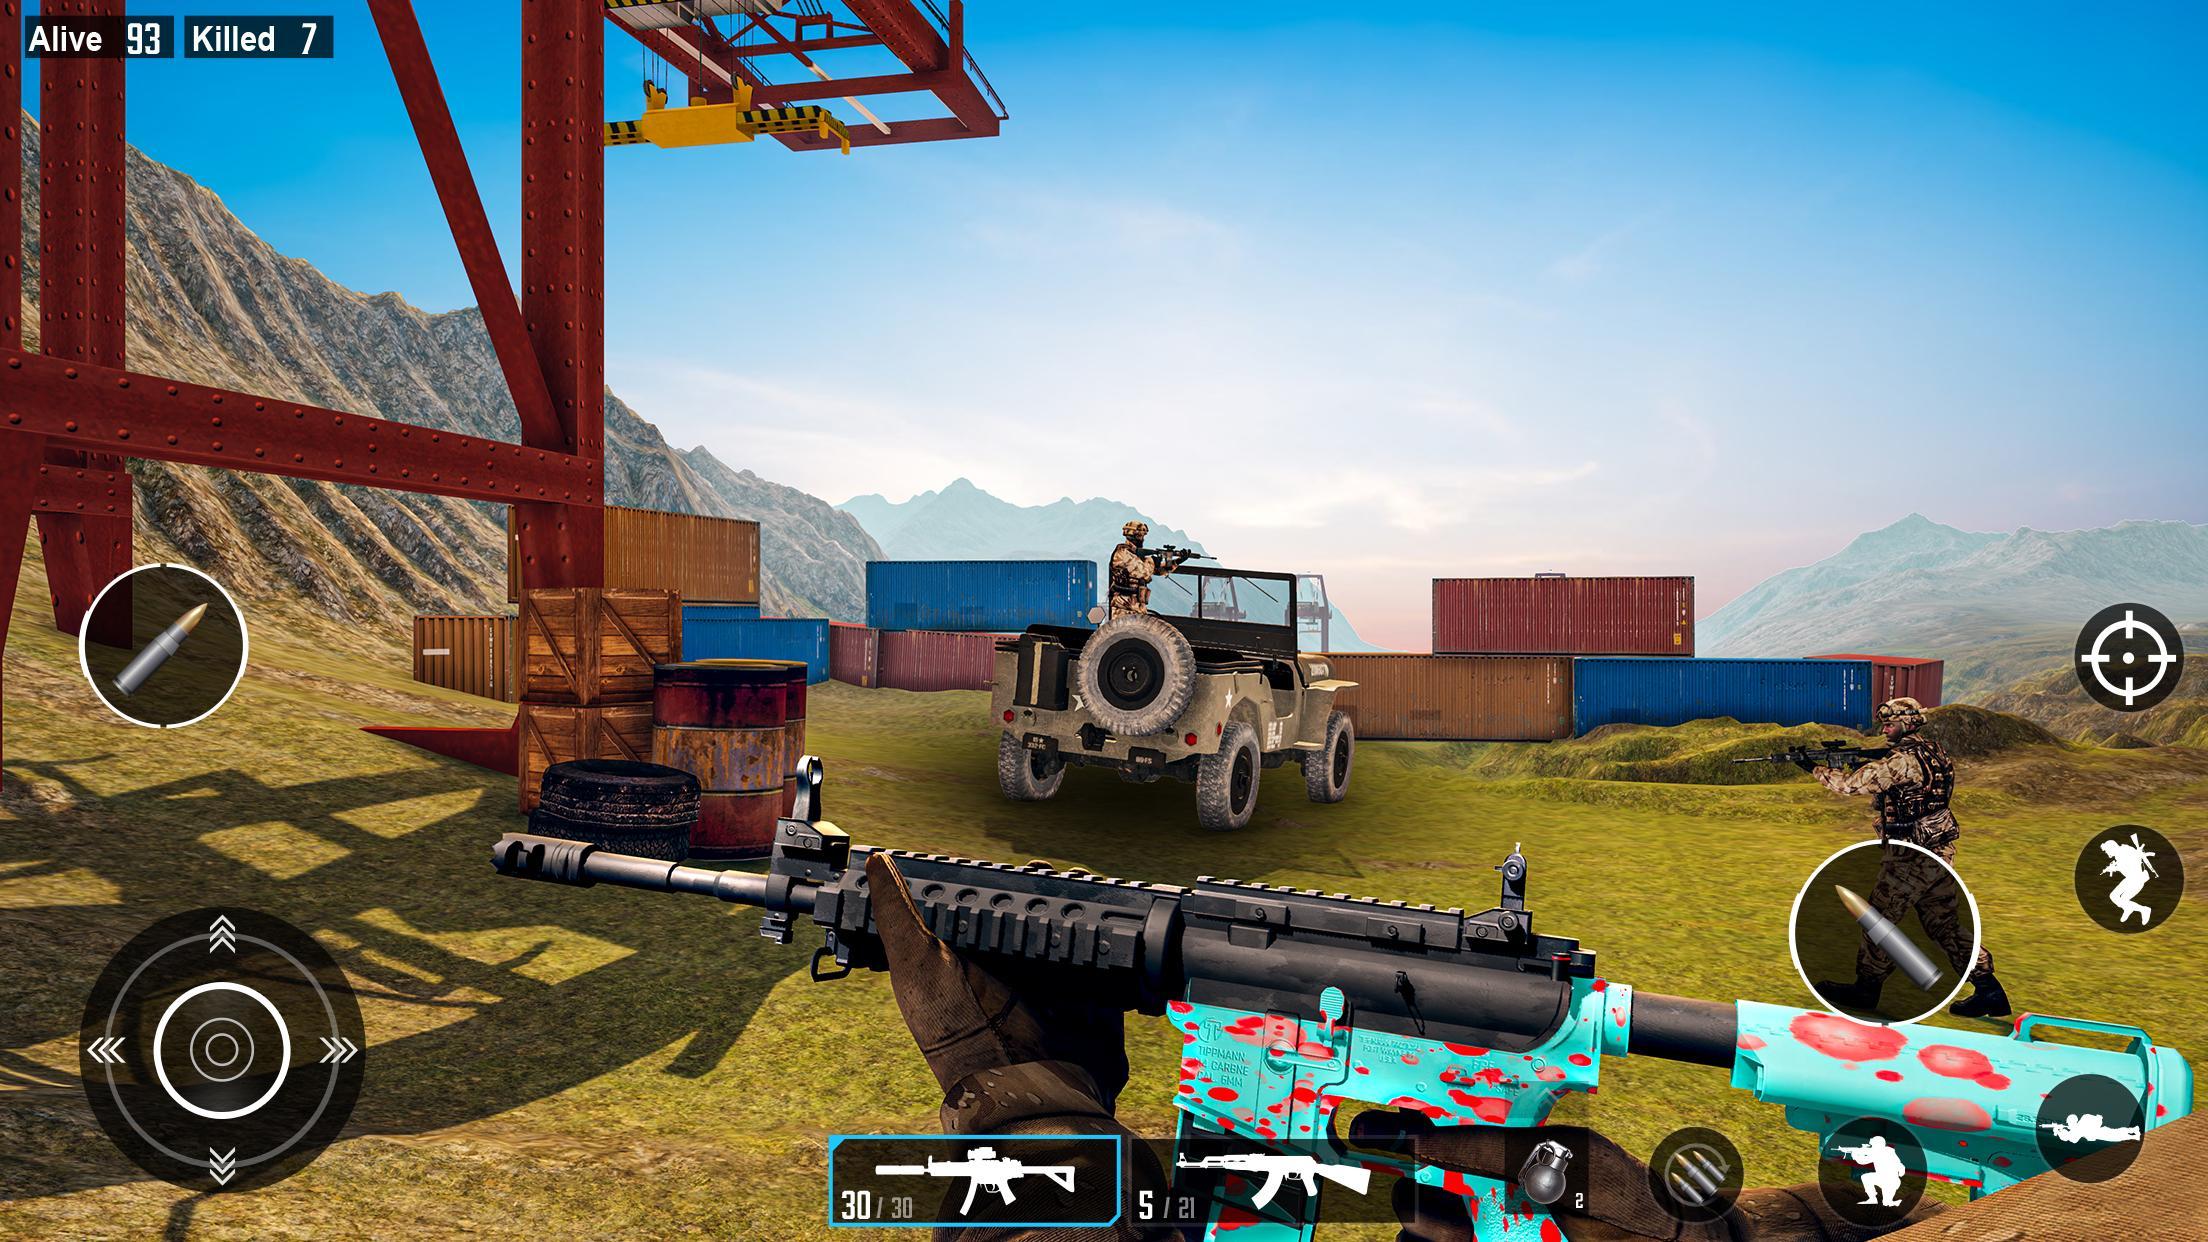 Real Commando Mission - Free Shooting Games 2020 3.5 Screenshot 2